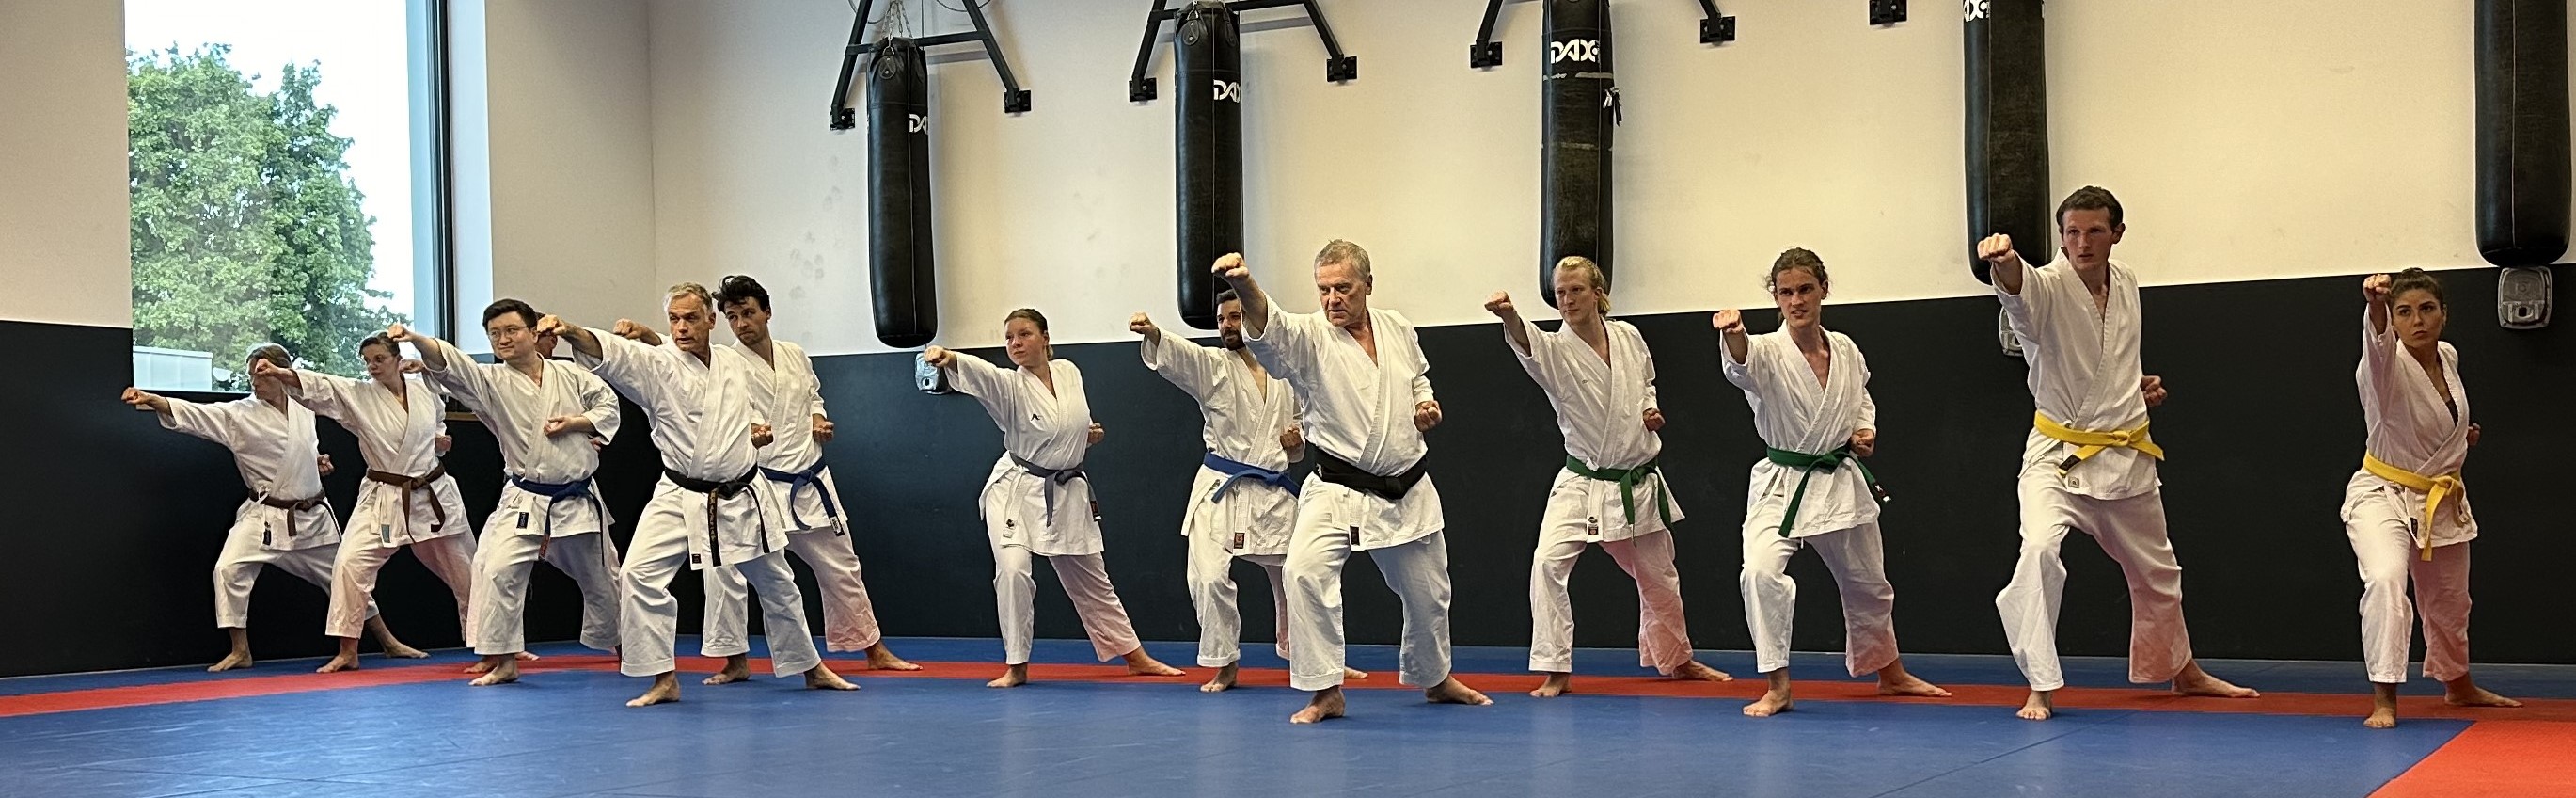 Karatetraining